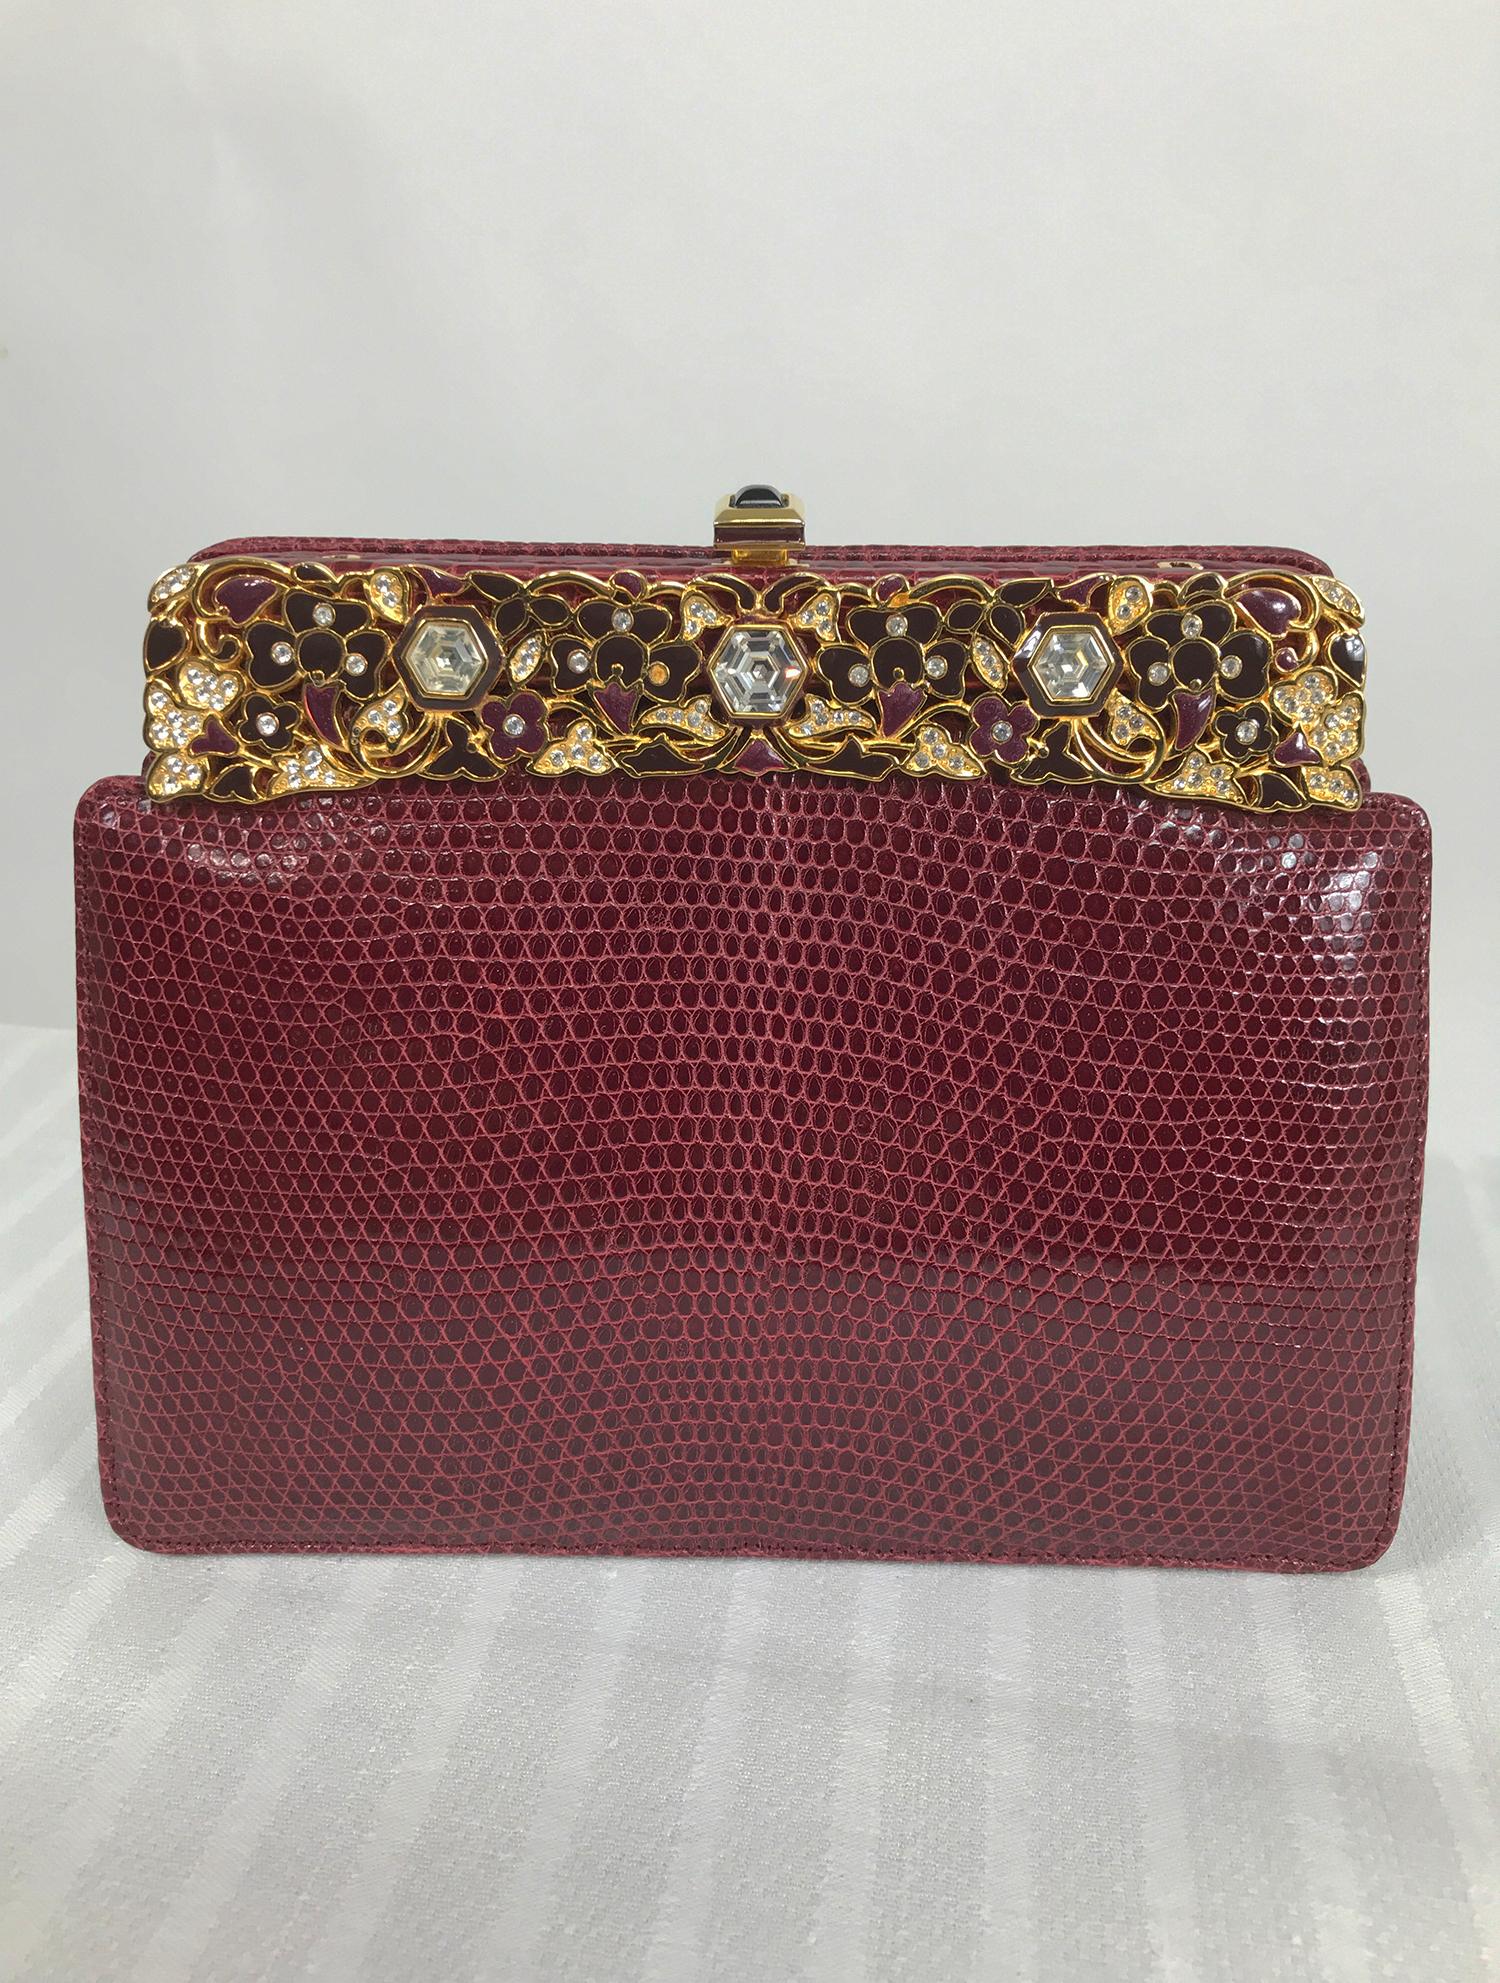 jeweled clutch purse